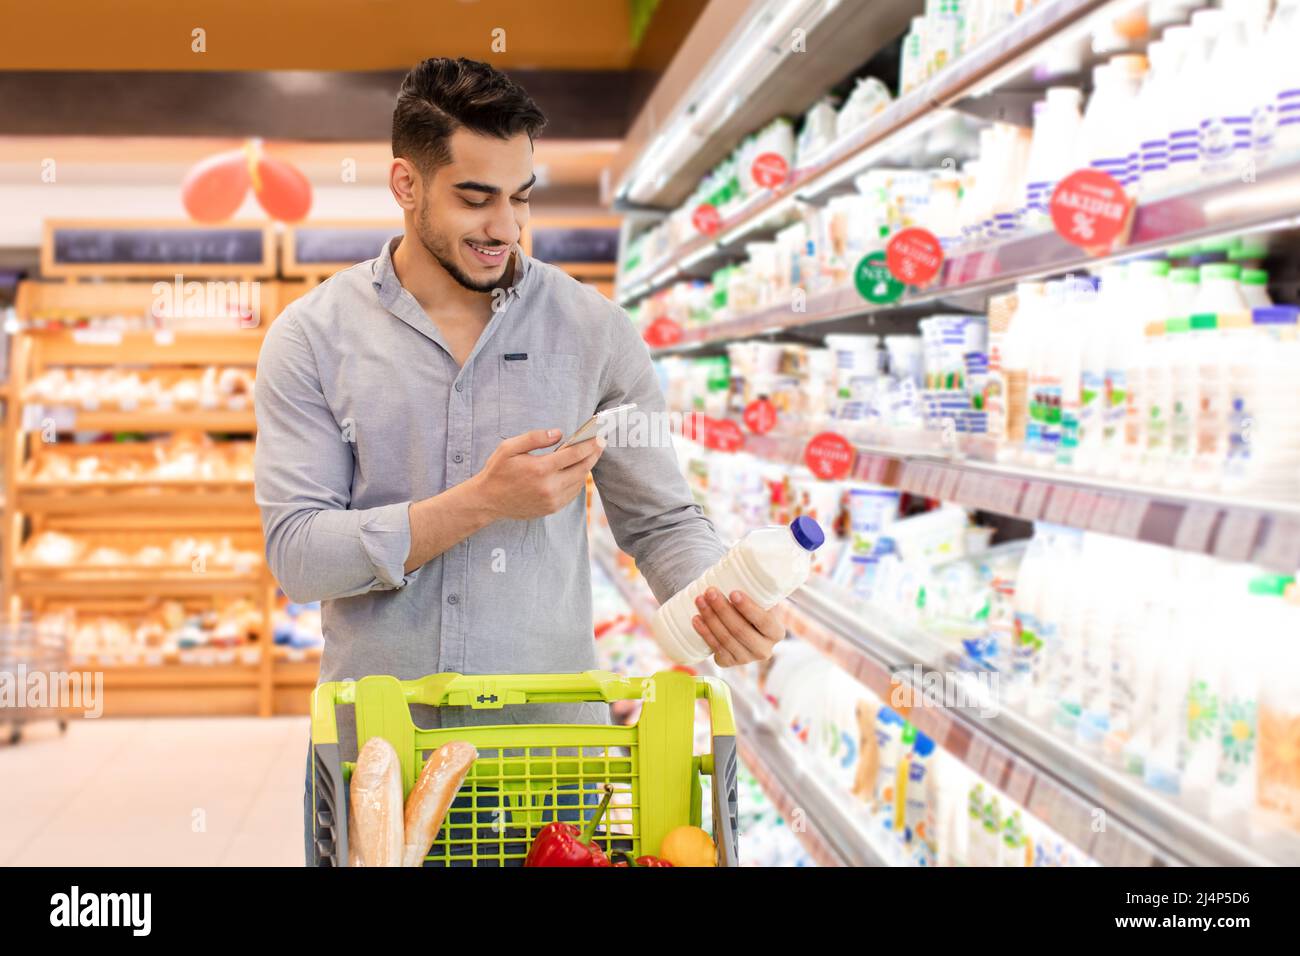 Arabic Guy Scanning Milk Using Phone Shopping Groceries In Supermarket Stock Photo